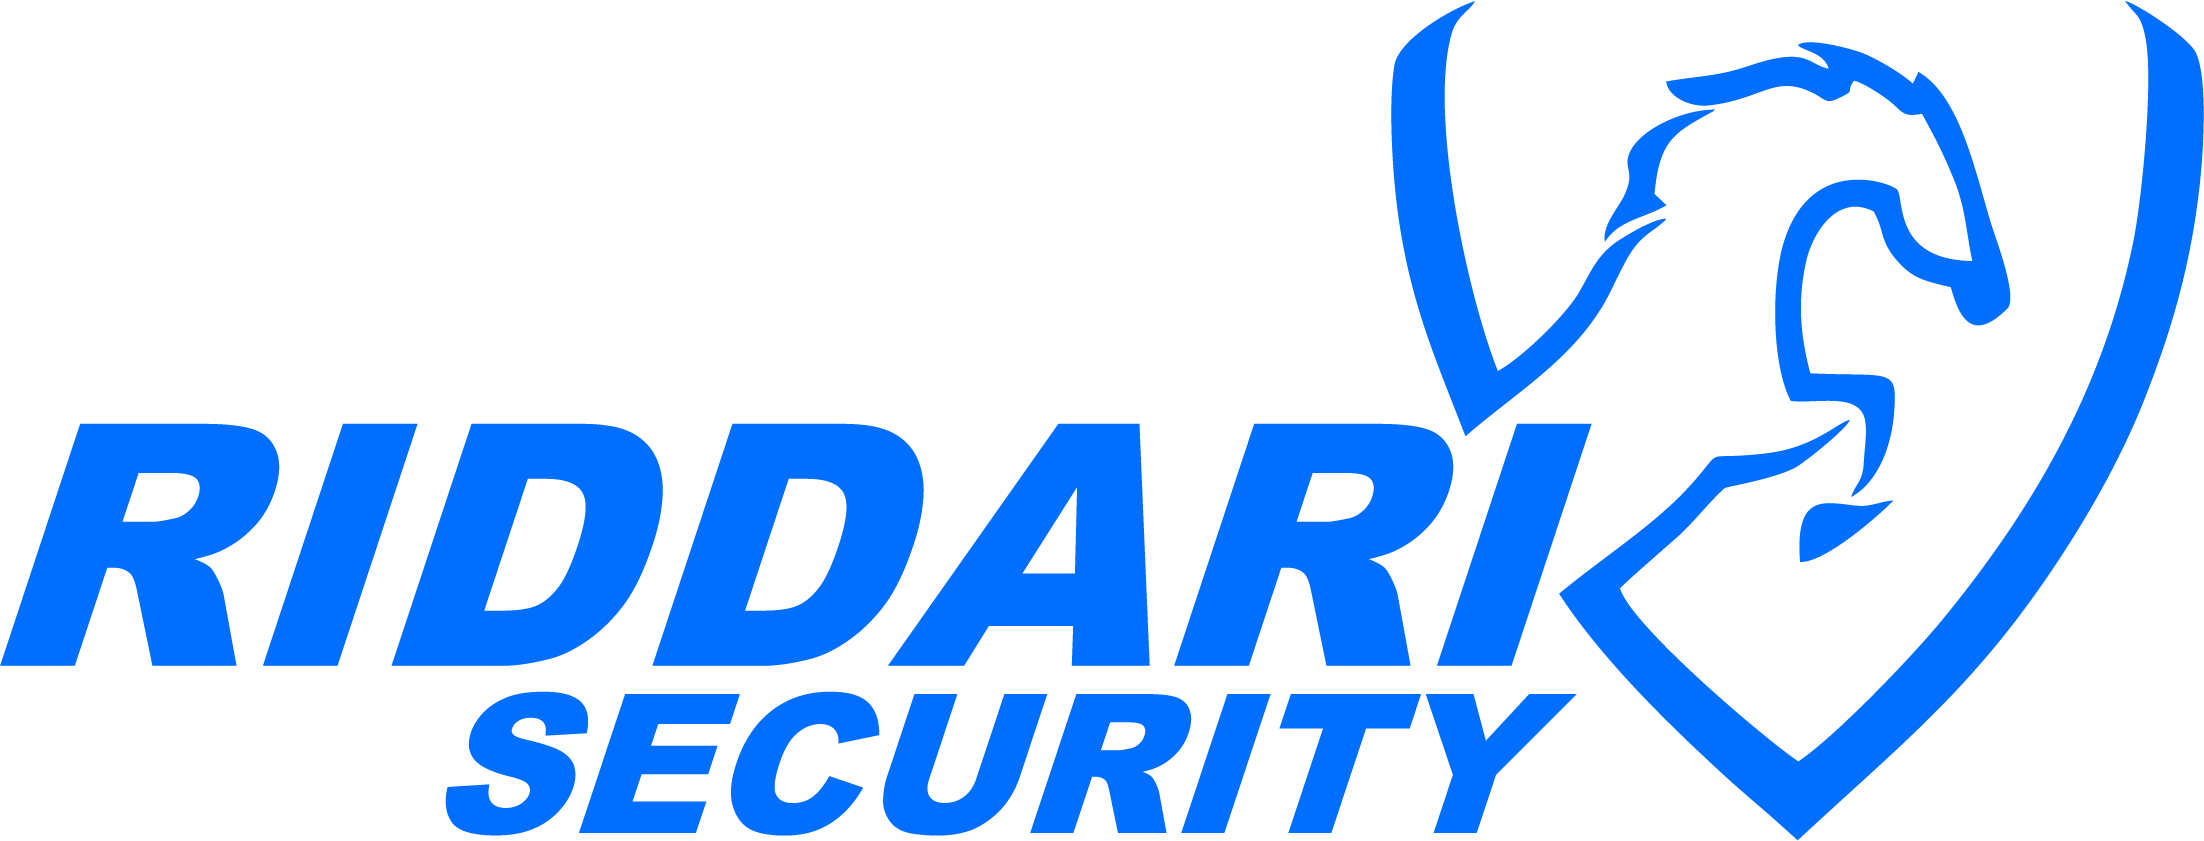 Riddari Security logo